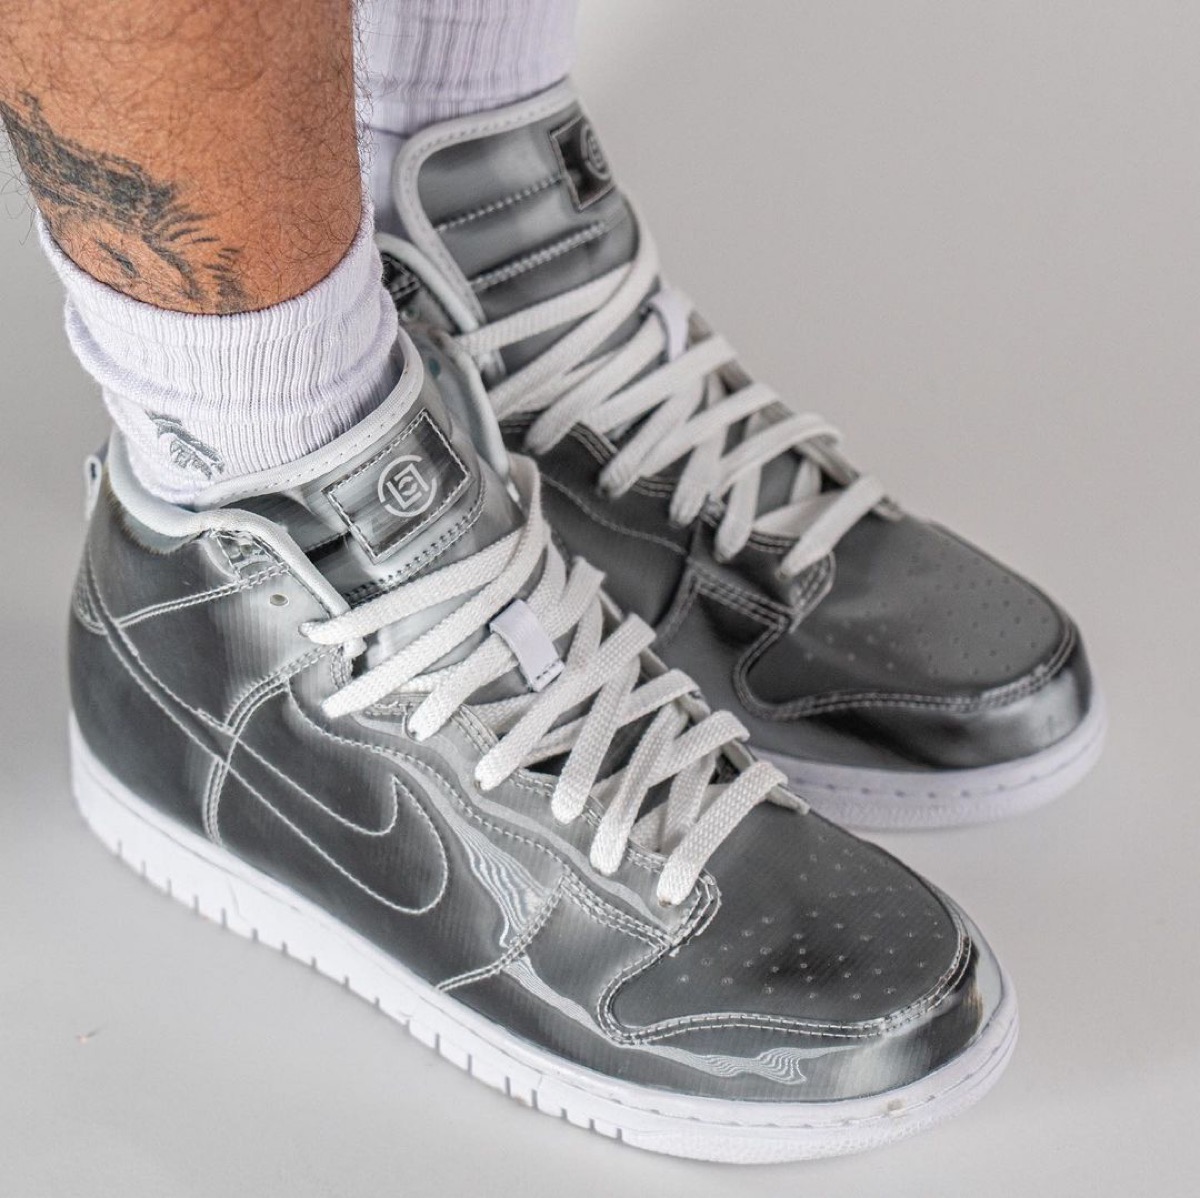 Metallic clot x Nike Dunk High “silver metallic” dunk collection插图1